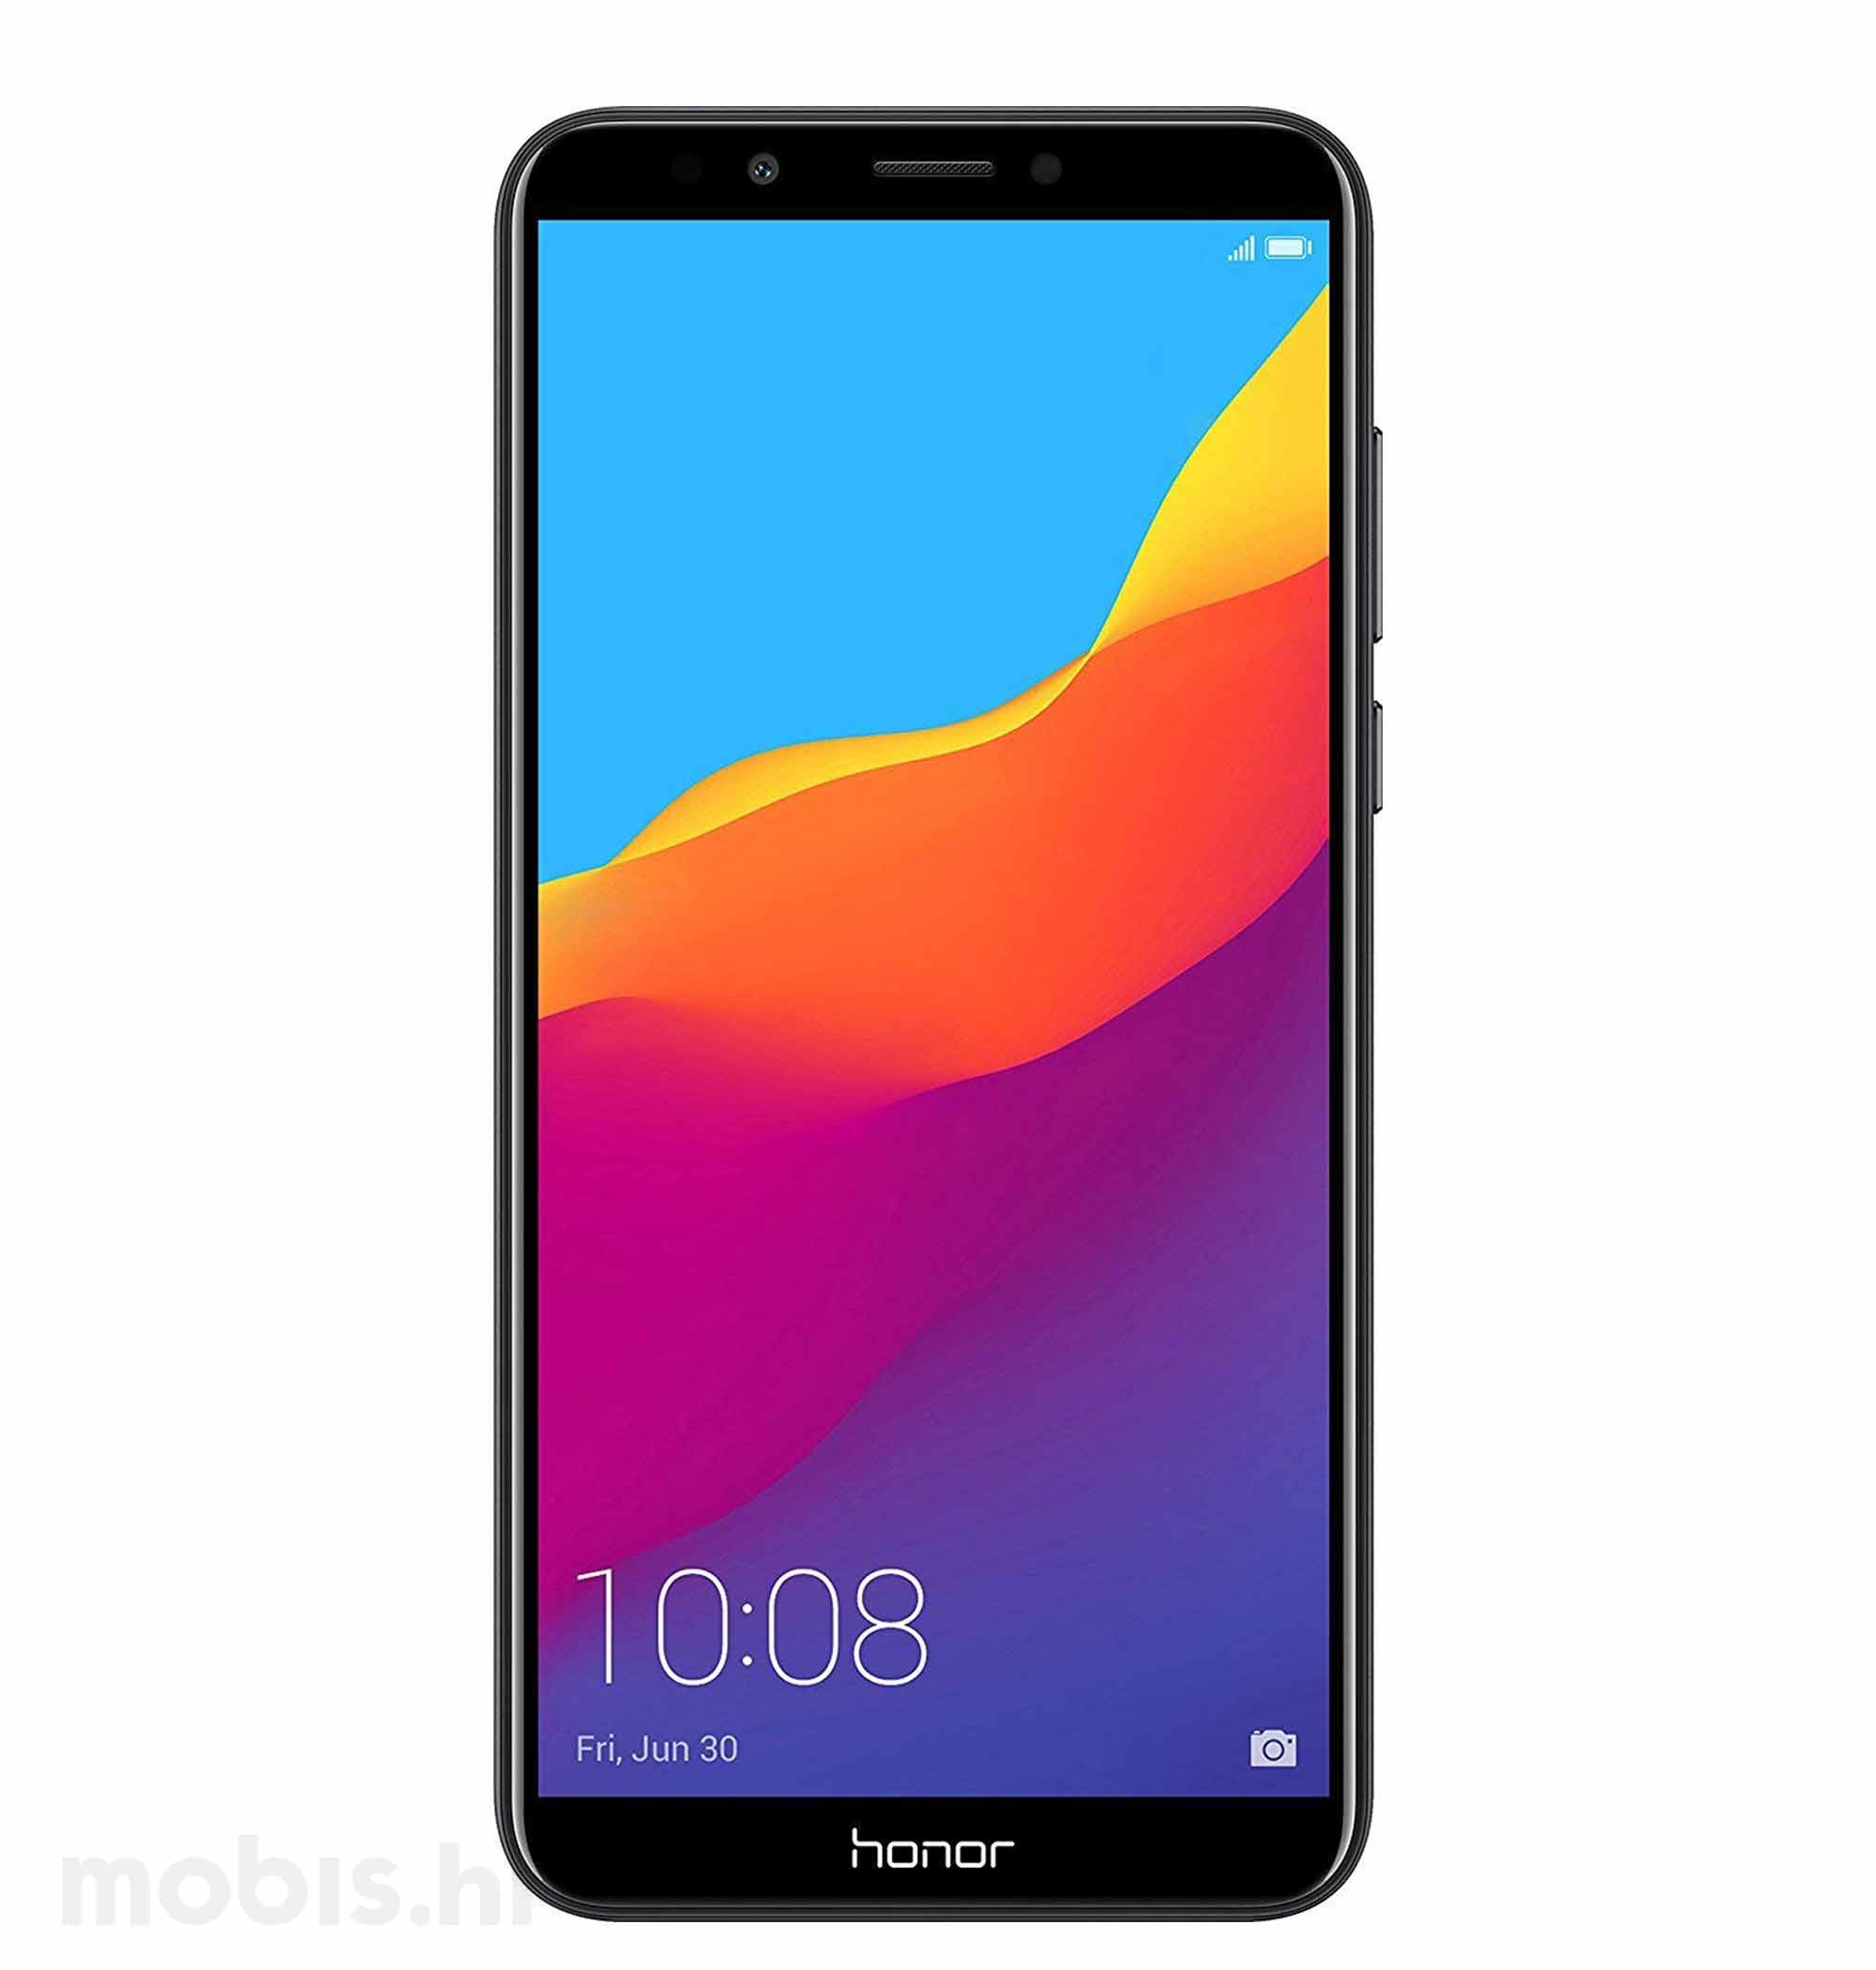 V c pro. Смартфон Honor 7a Pro. Смартфон Honor 7c. Смартфон Honor 7a Pro Black. Huawei Honor 7c Pro.